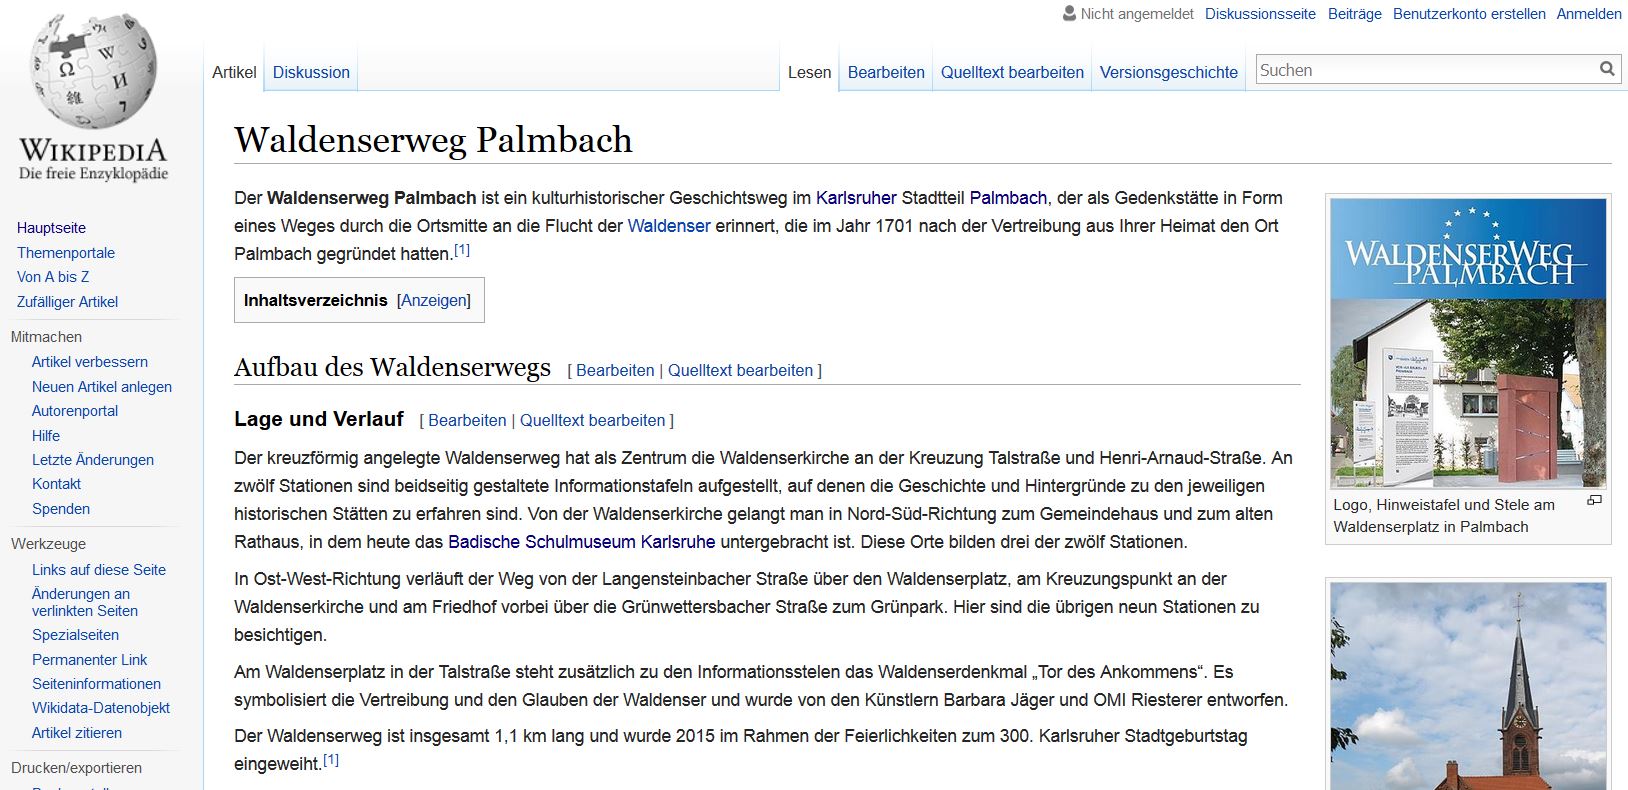 Wikipedia Waldenserweg Palmbach